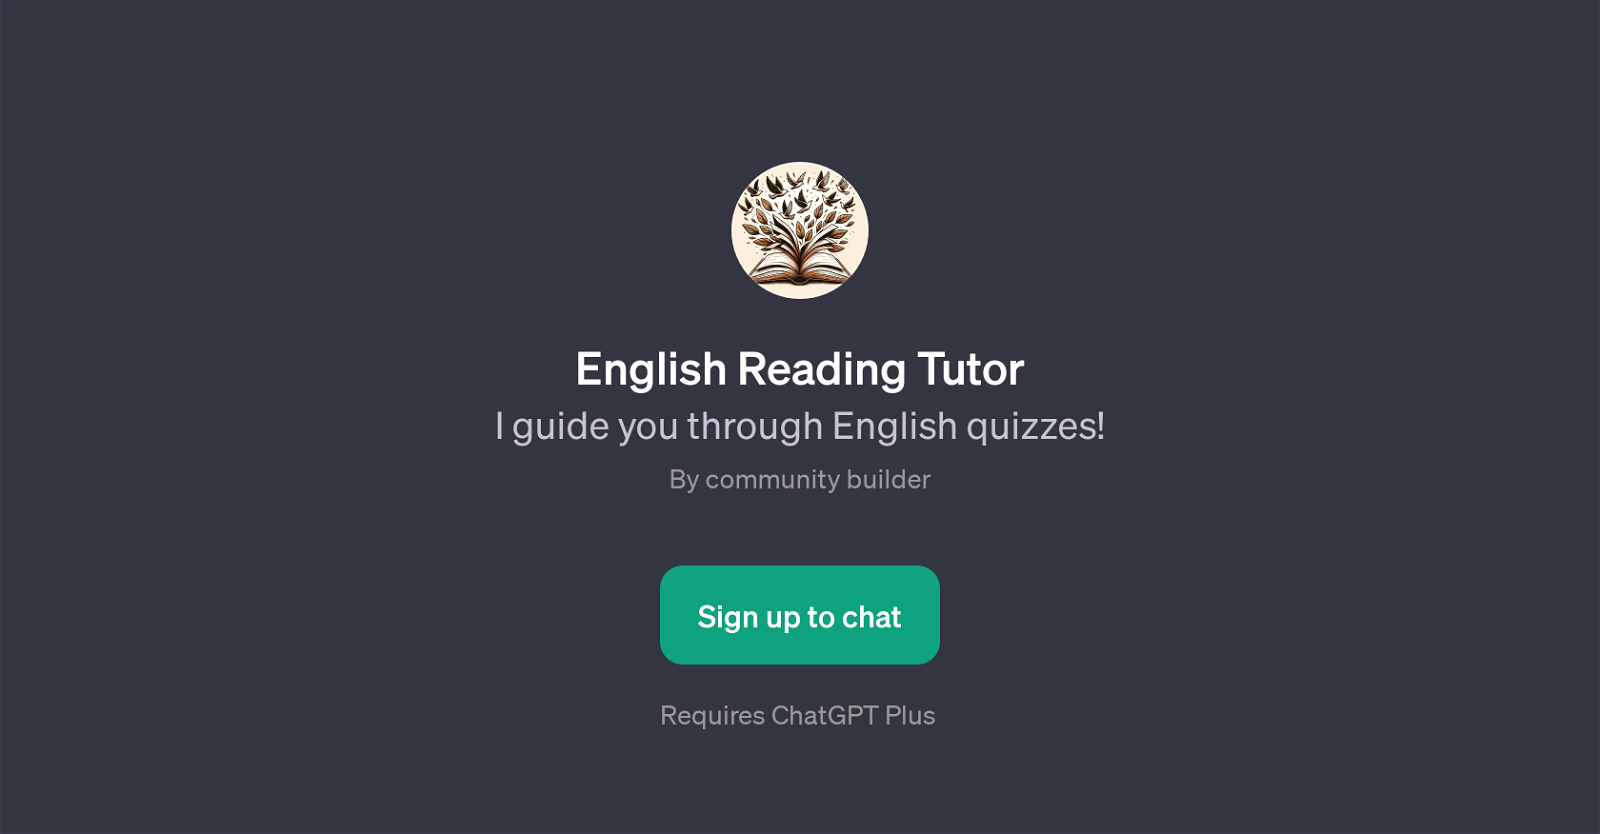 English Reading Tutor website